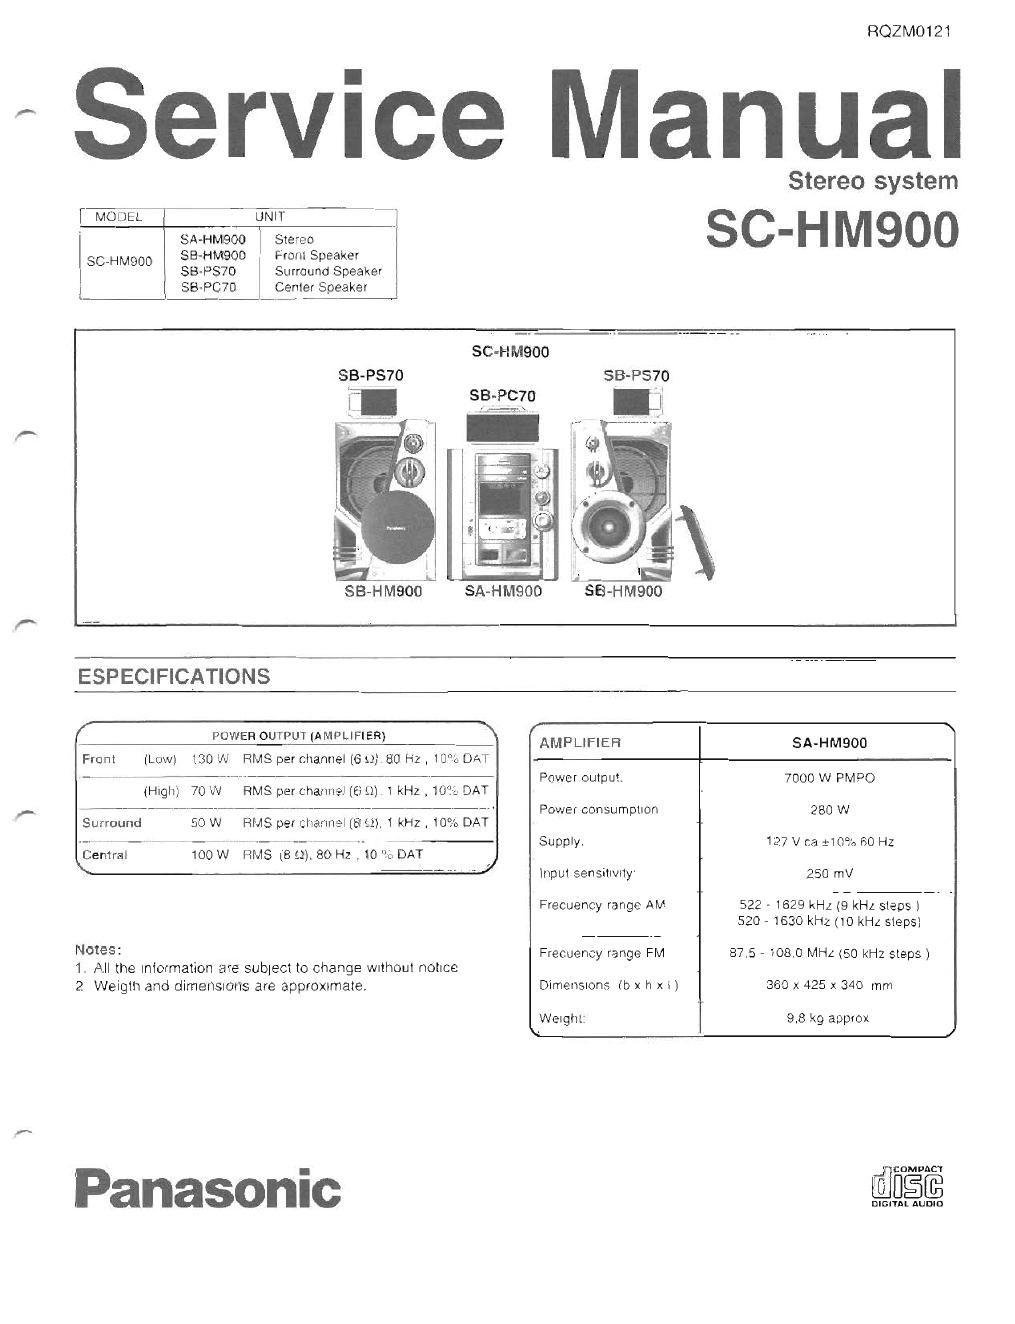 panasonic sa hm900 service manual